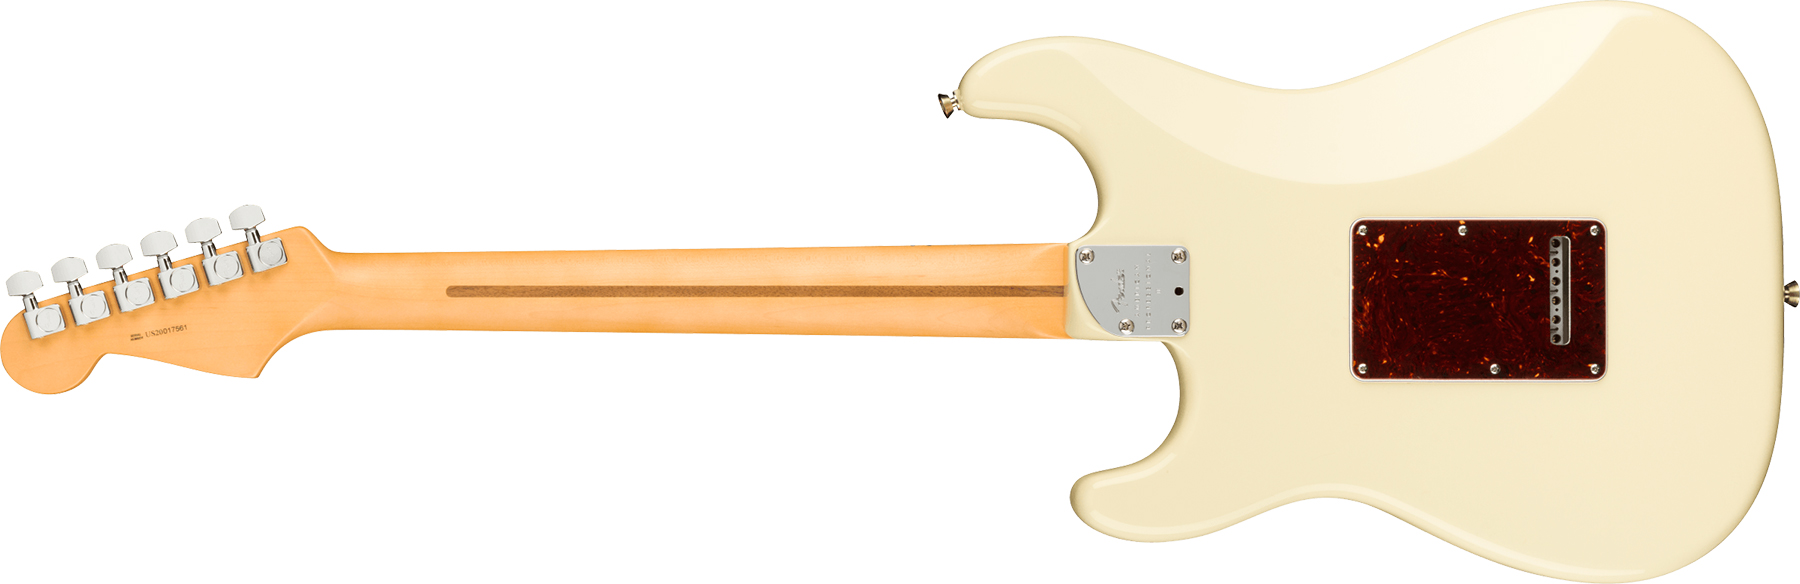 Fender Strat American Professional Ii Hss Usa Mn - Olympic White - Guitarra eléctrica con forma de str. - Variation 1